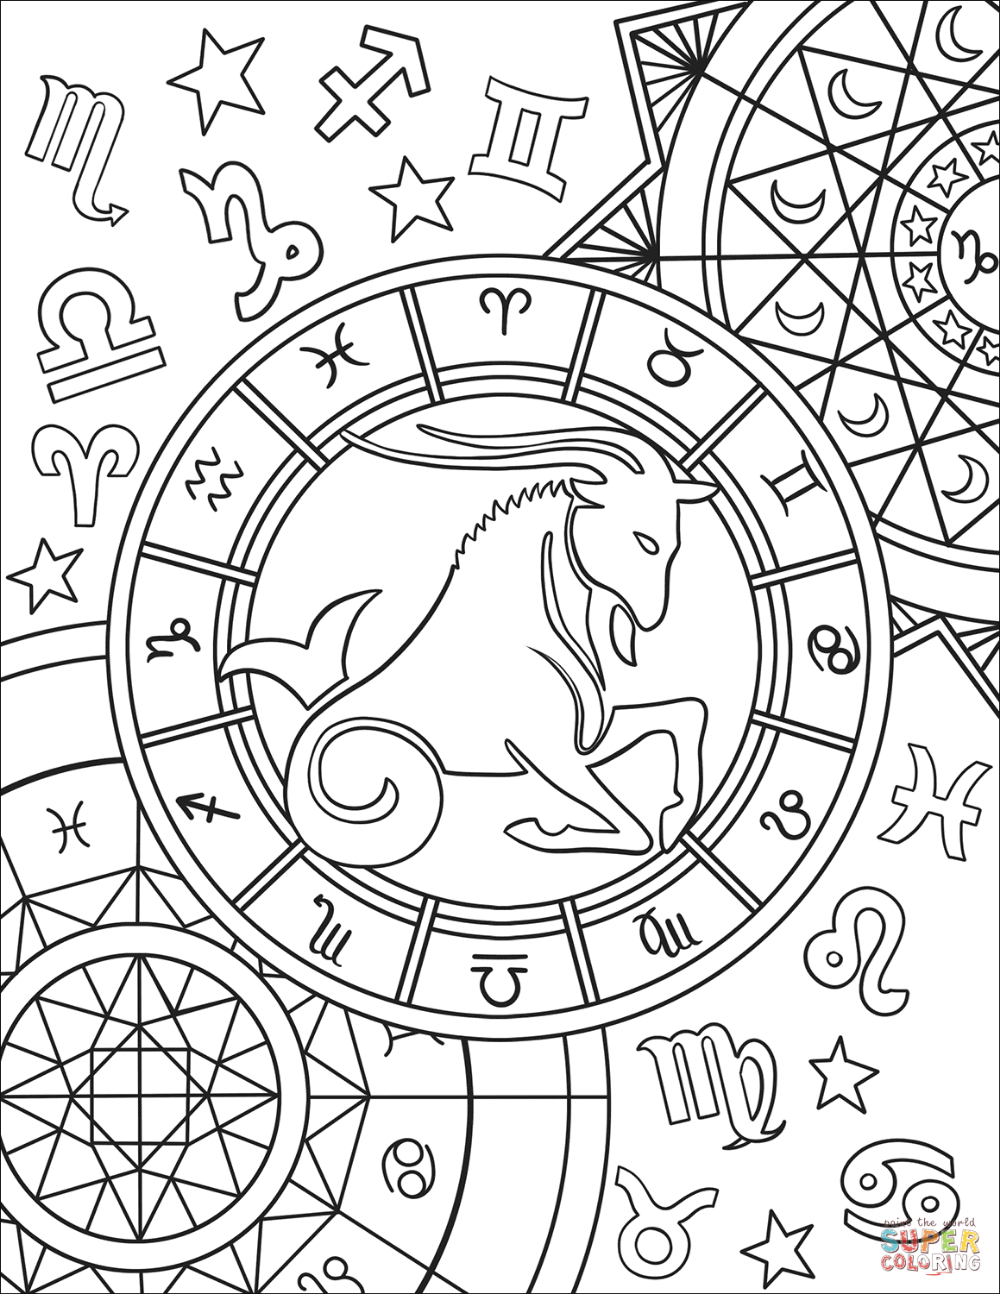 Capricorn Zodiac Sign coloring page | Free Printable Coloring Pages | Zodiac  signs colors, Printable coloring pages, Coloring pages